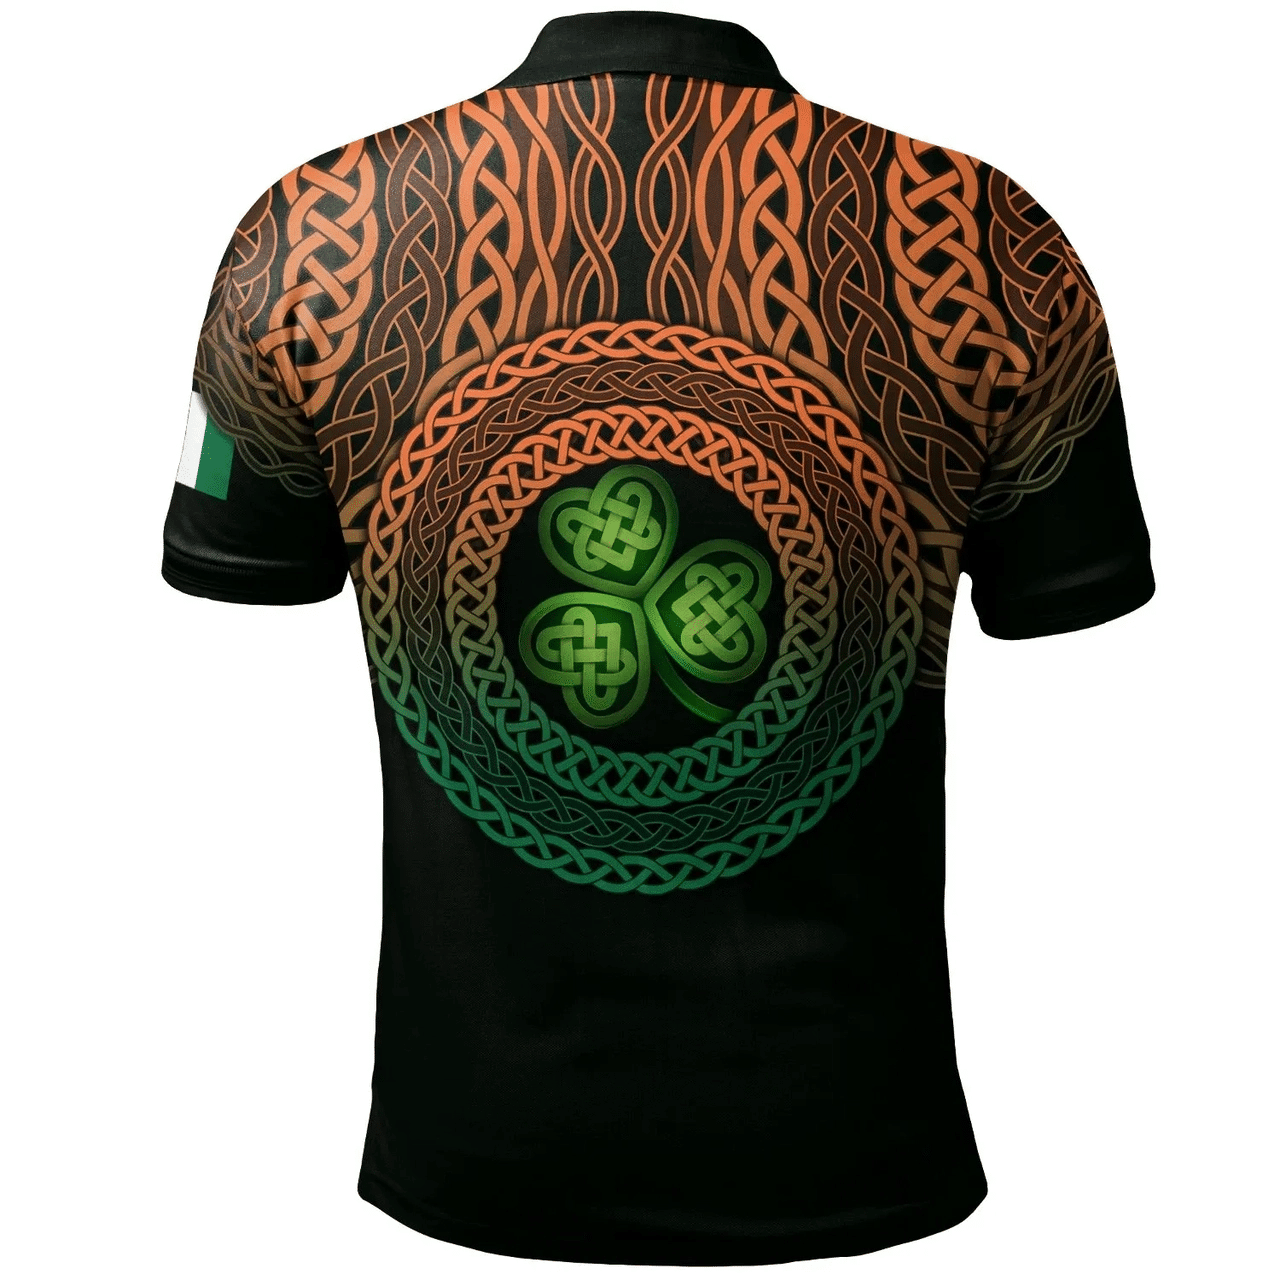 1stIreland Ireland Polo Shirt - Coonan or O'Conan Irish Family Crest Polo Shirt - Celtic Pride A7 | 1stIreland.com